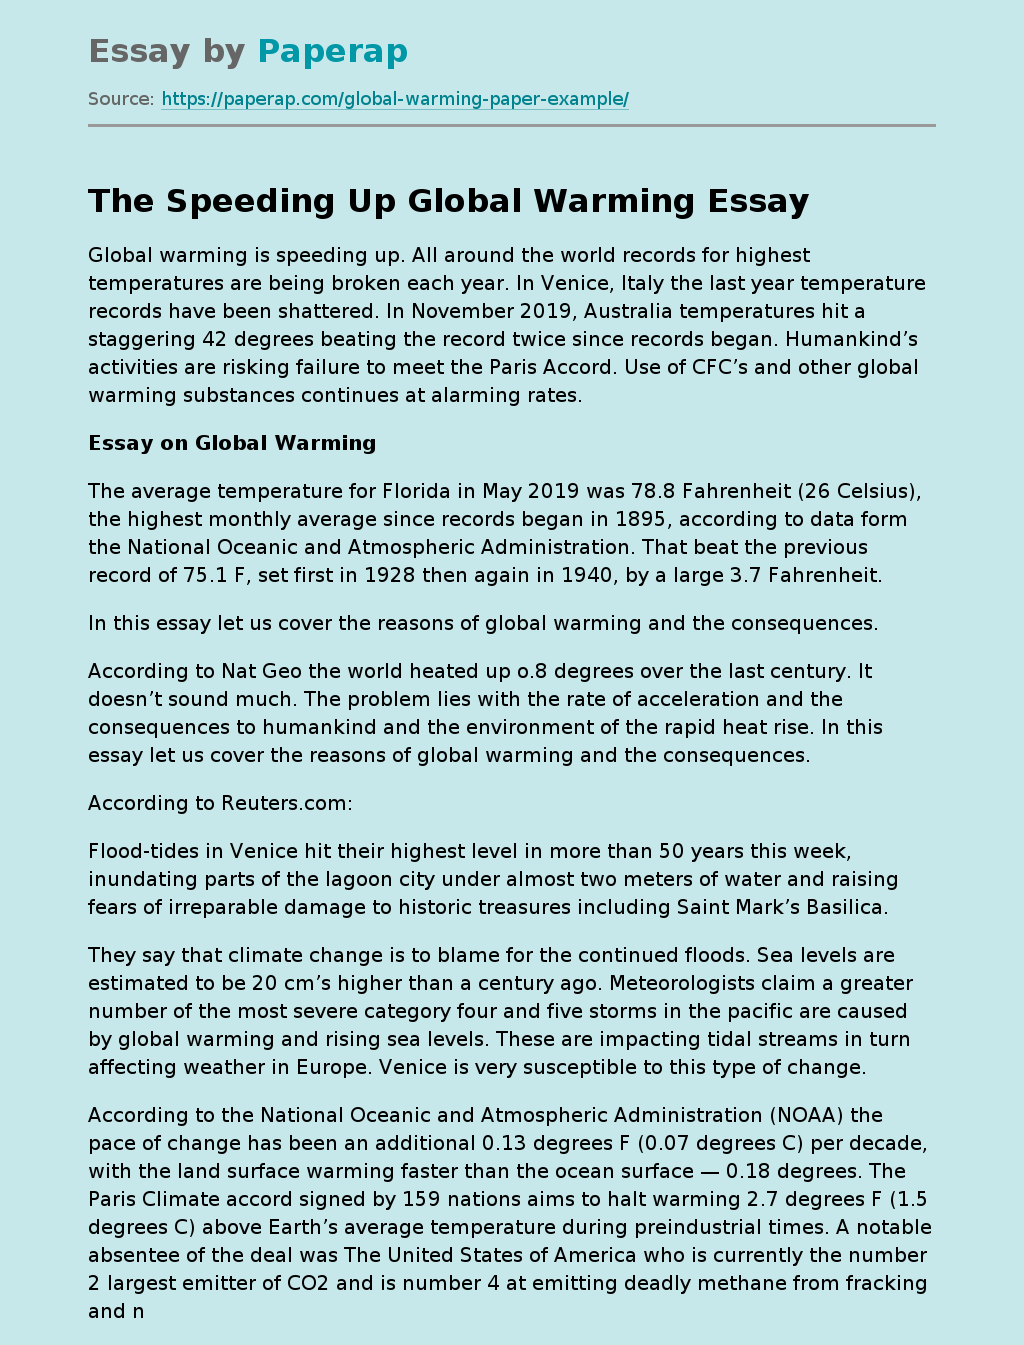 The Speeding Up Global Warming